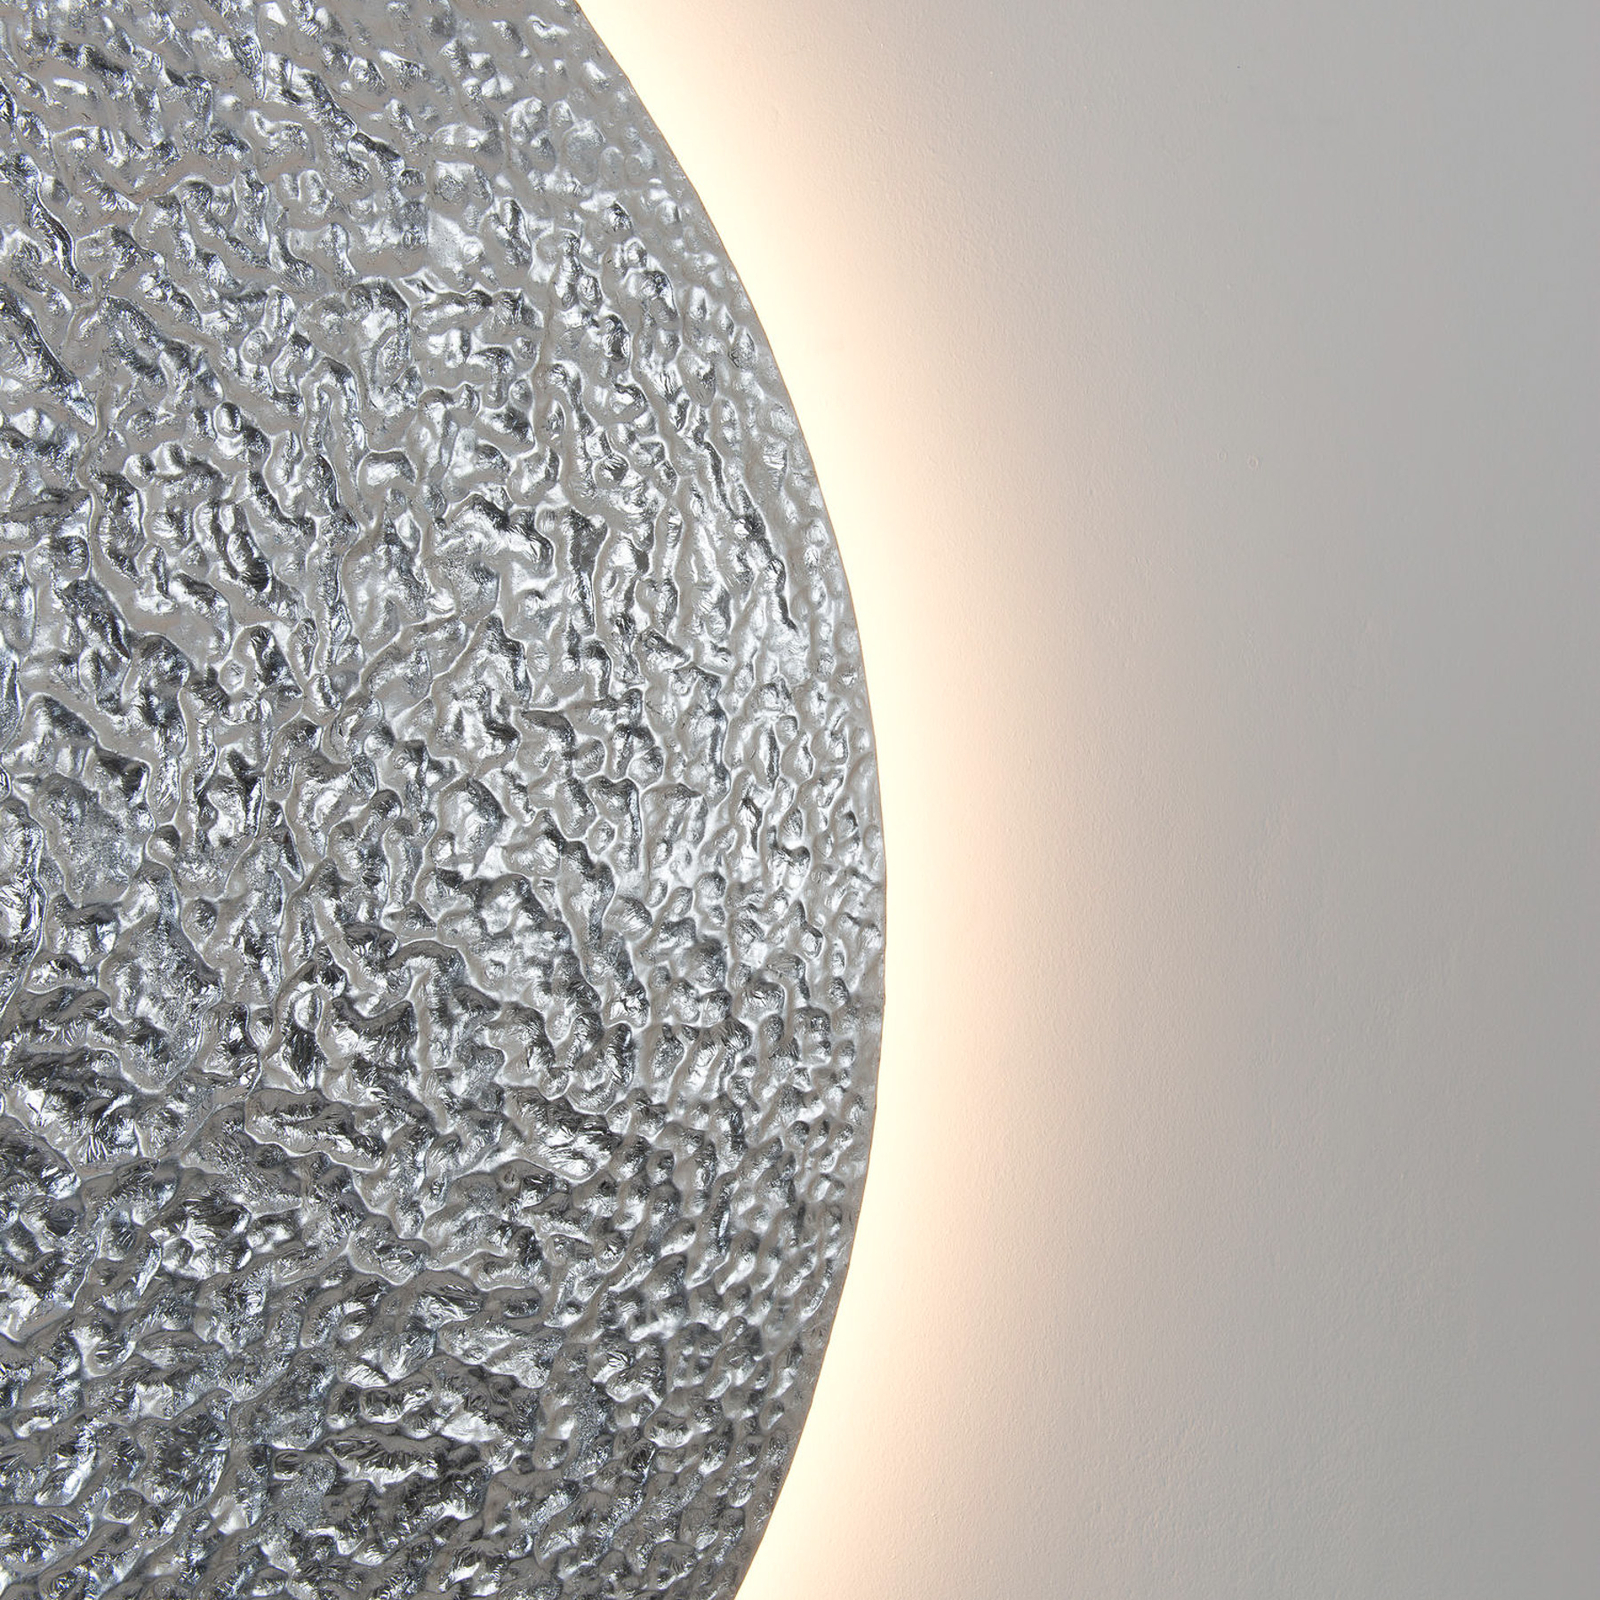 LED sienas lampa Meteor, sudraba krāsā, Ø 100 cm, dzelzs